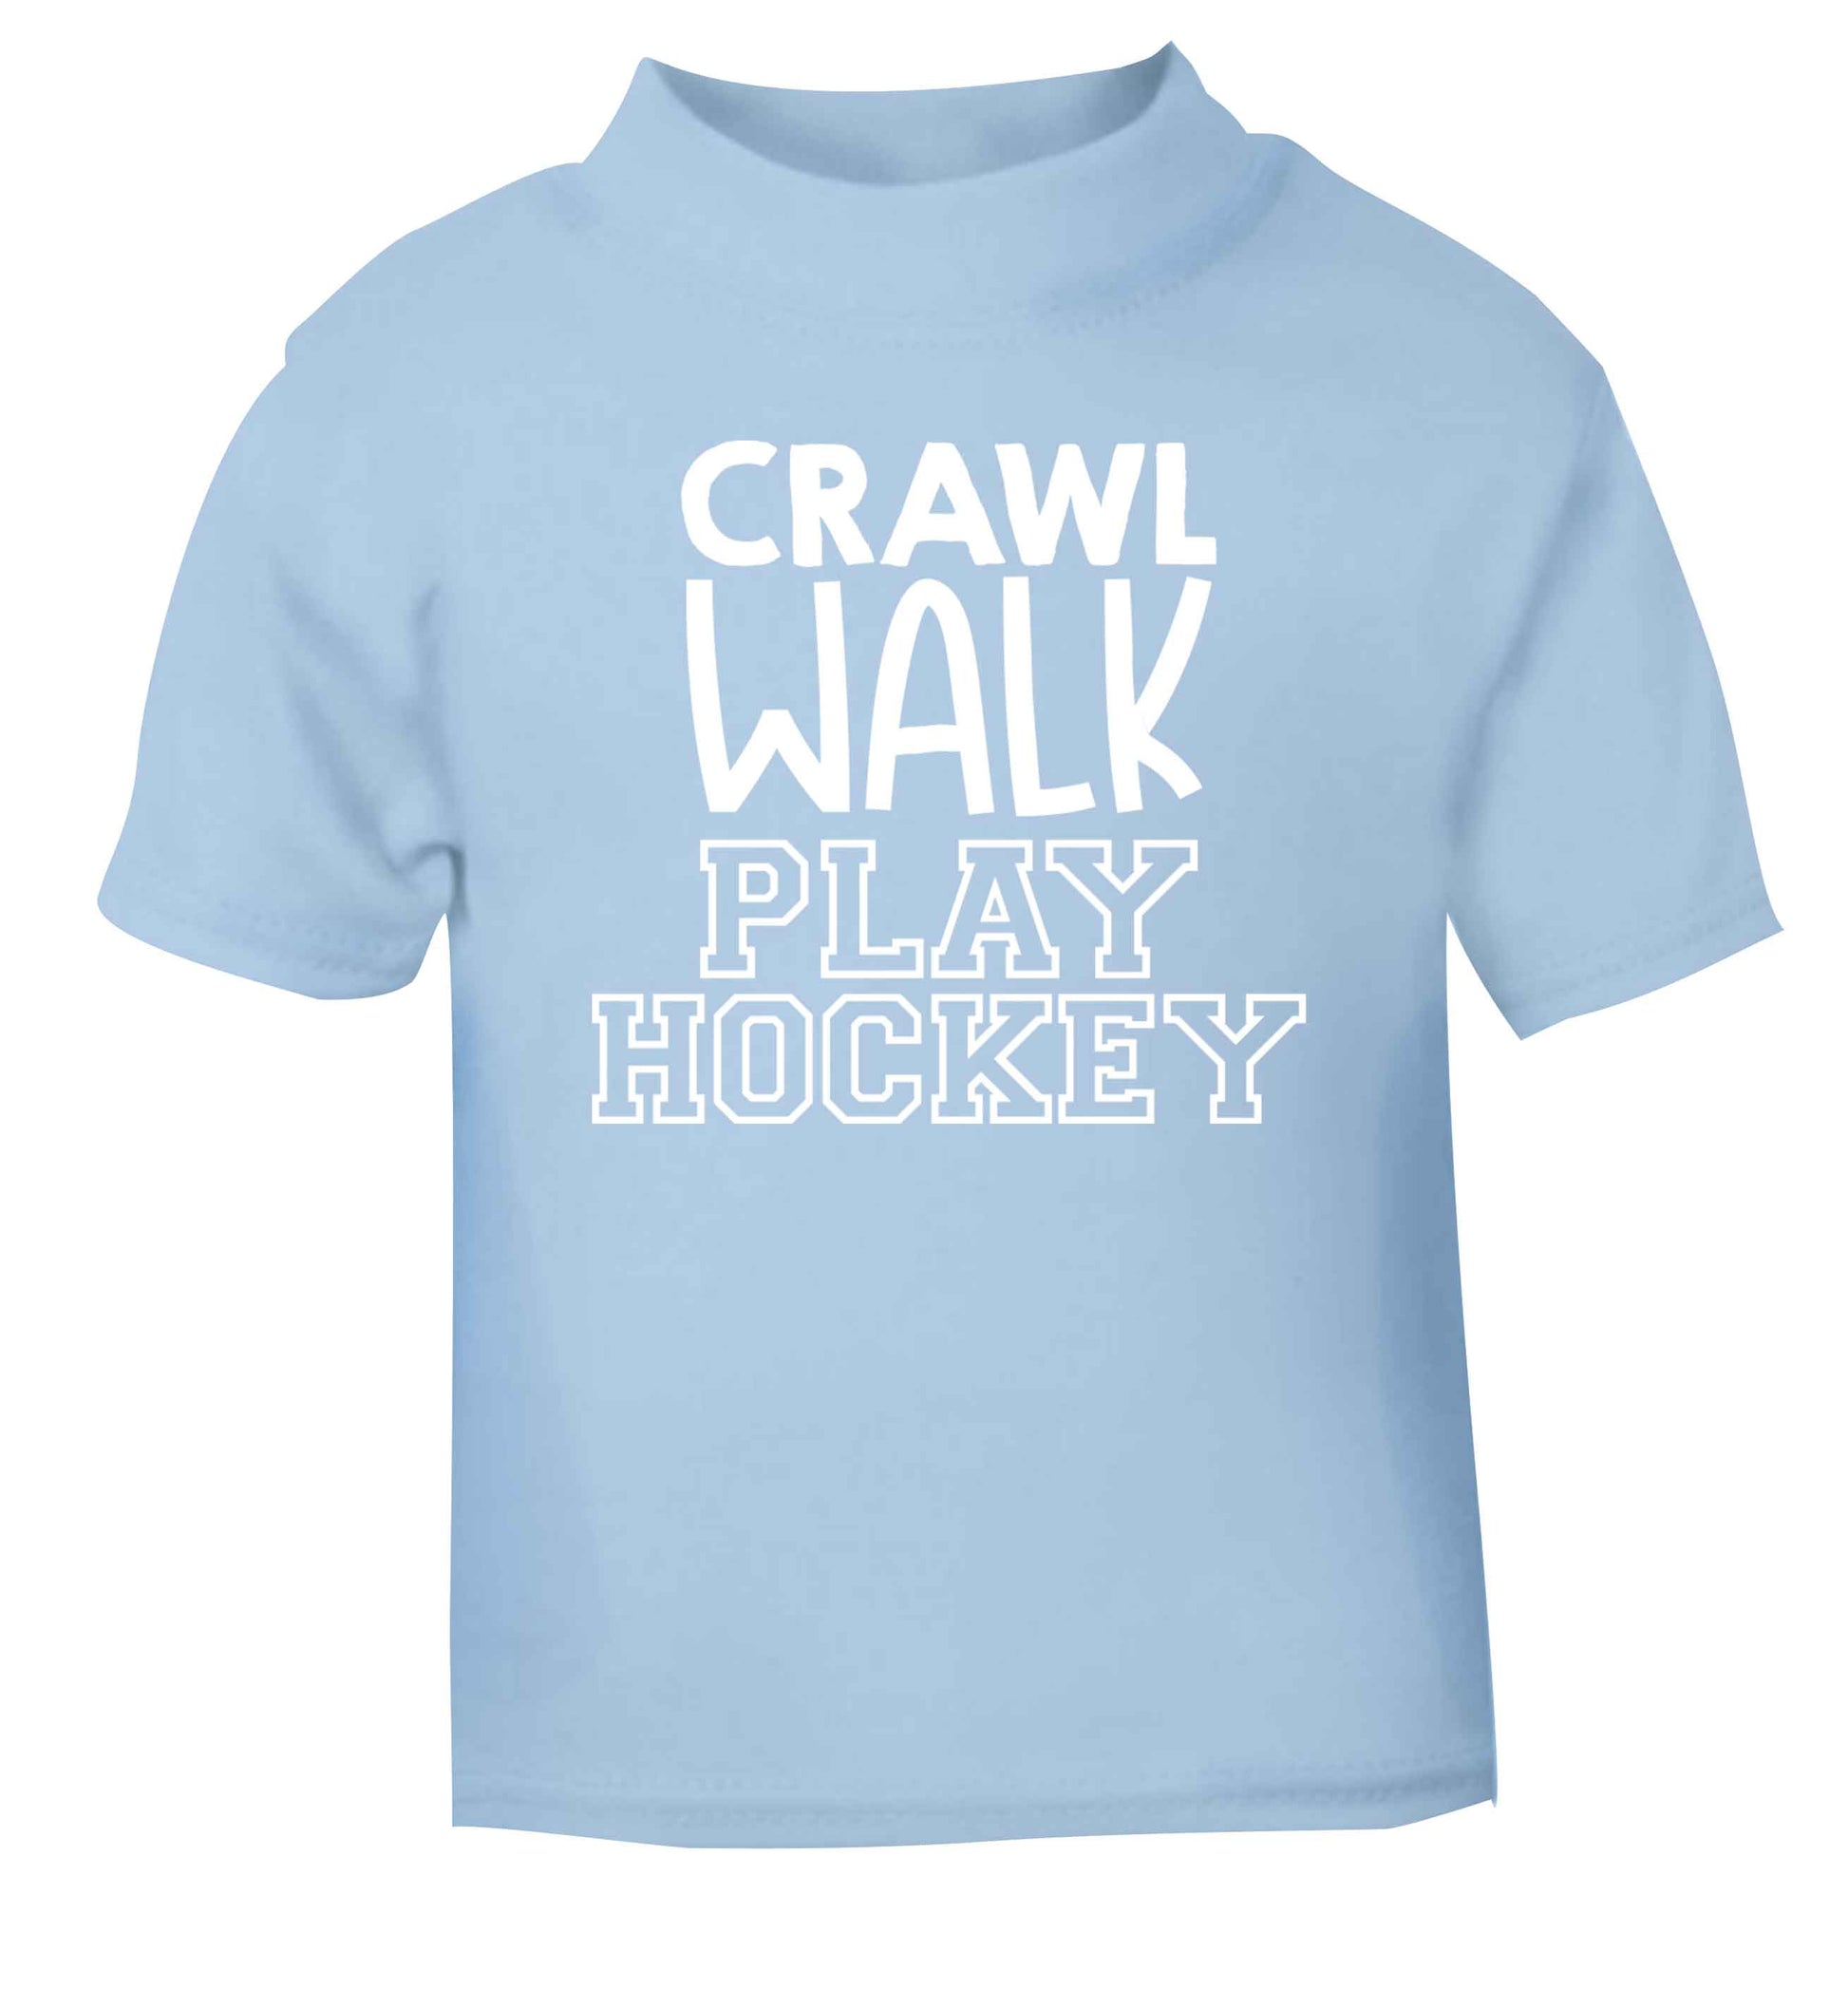 Crawl walk play hockey light blue Baby Toddler Tshirt 2 Years